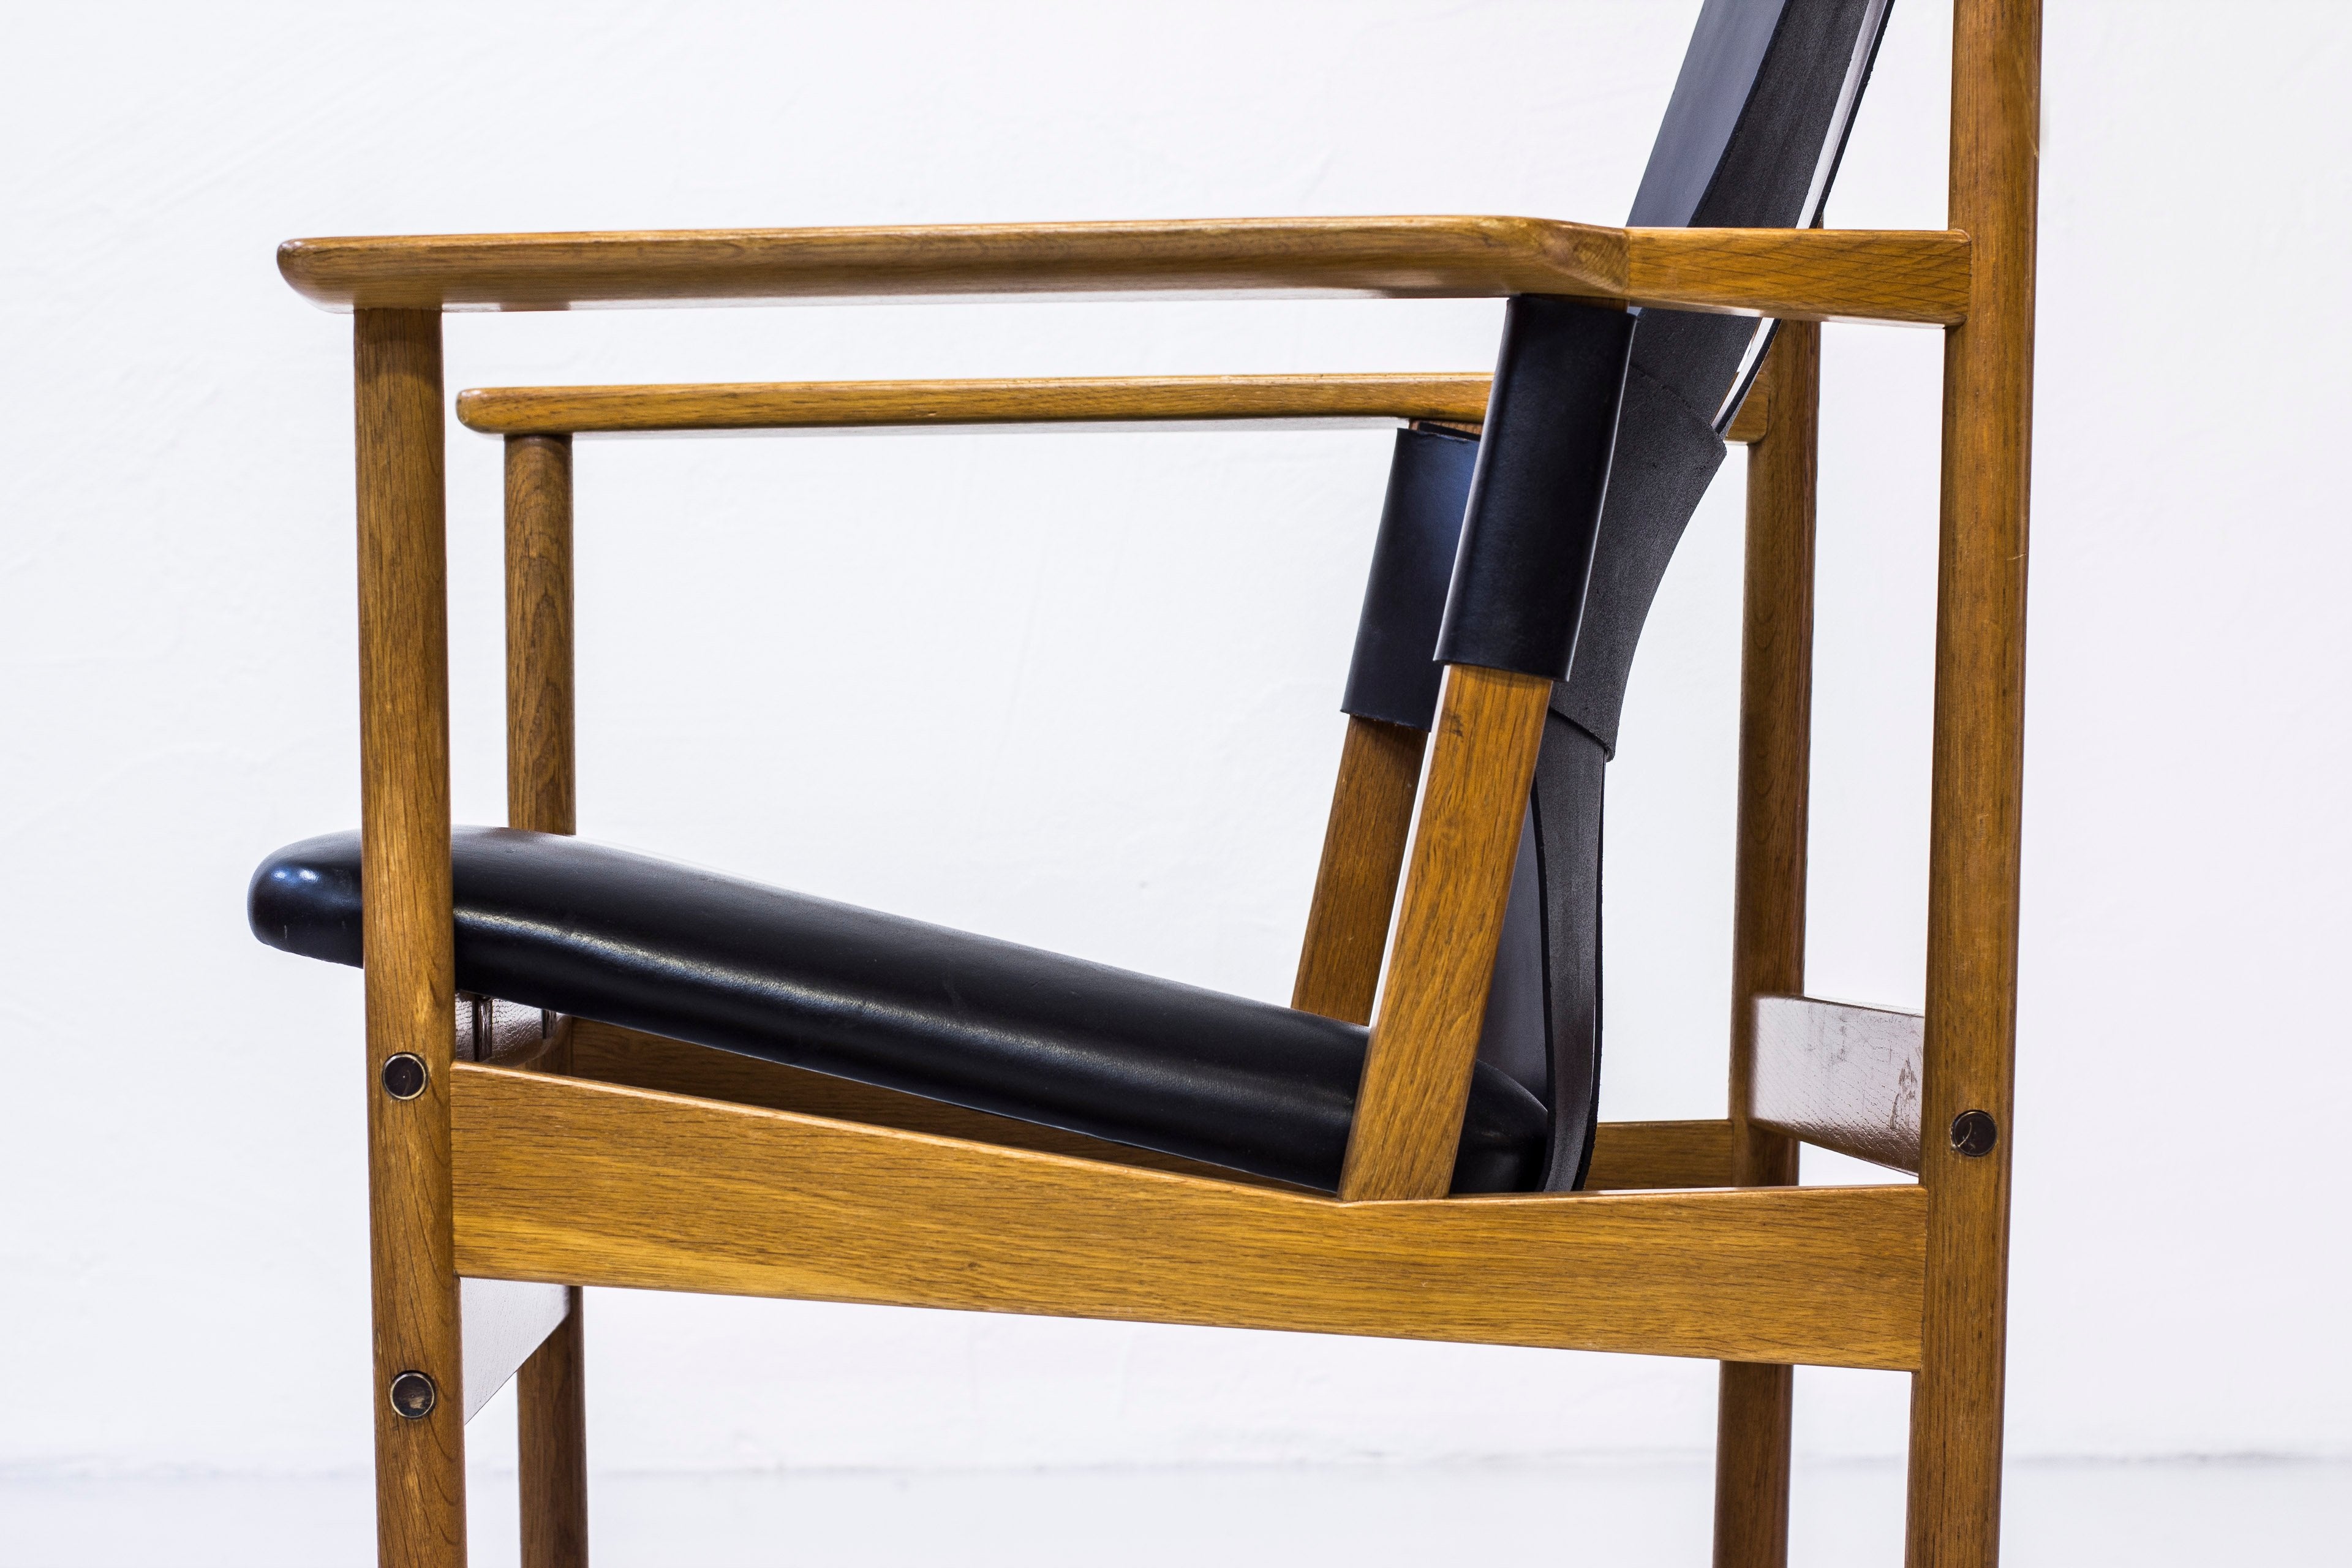 1950s Lounge chairs by Gunnar Eklöf